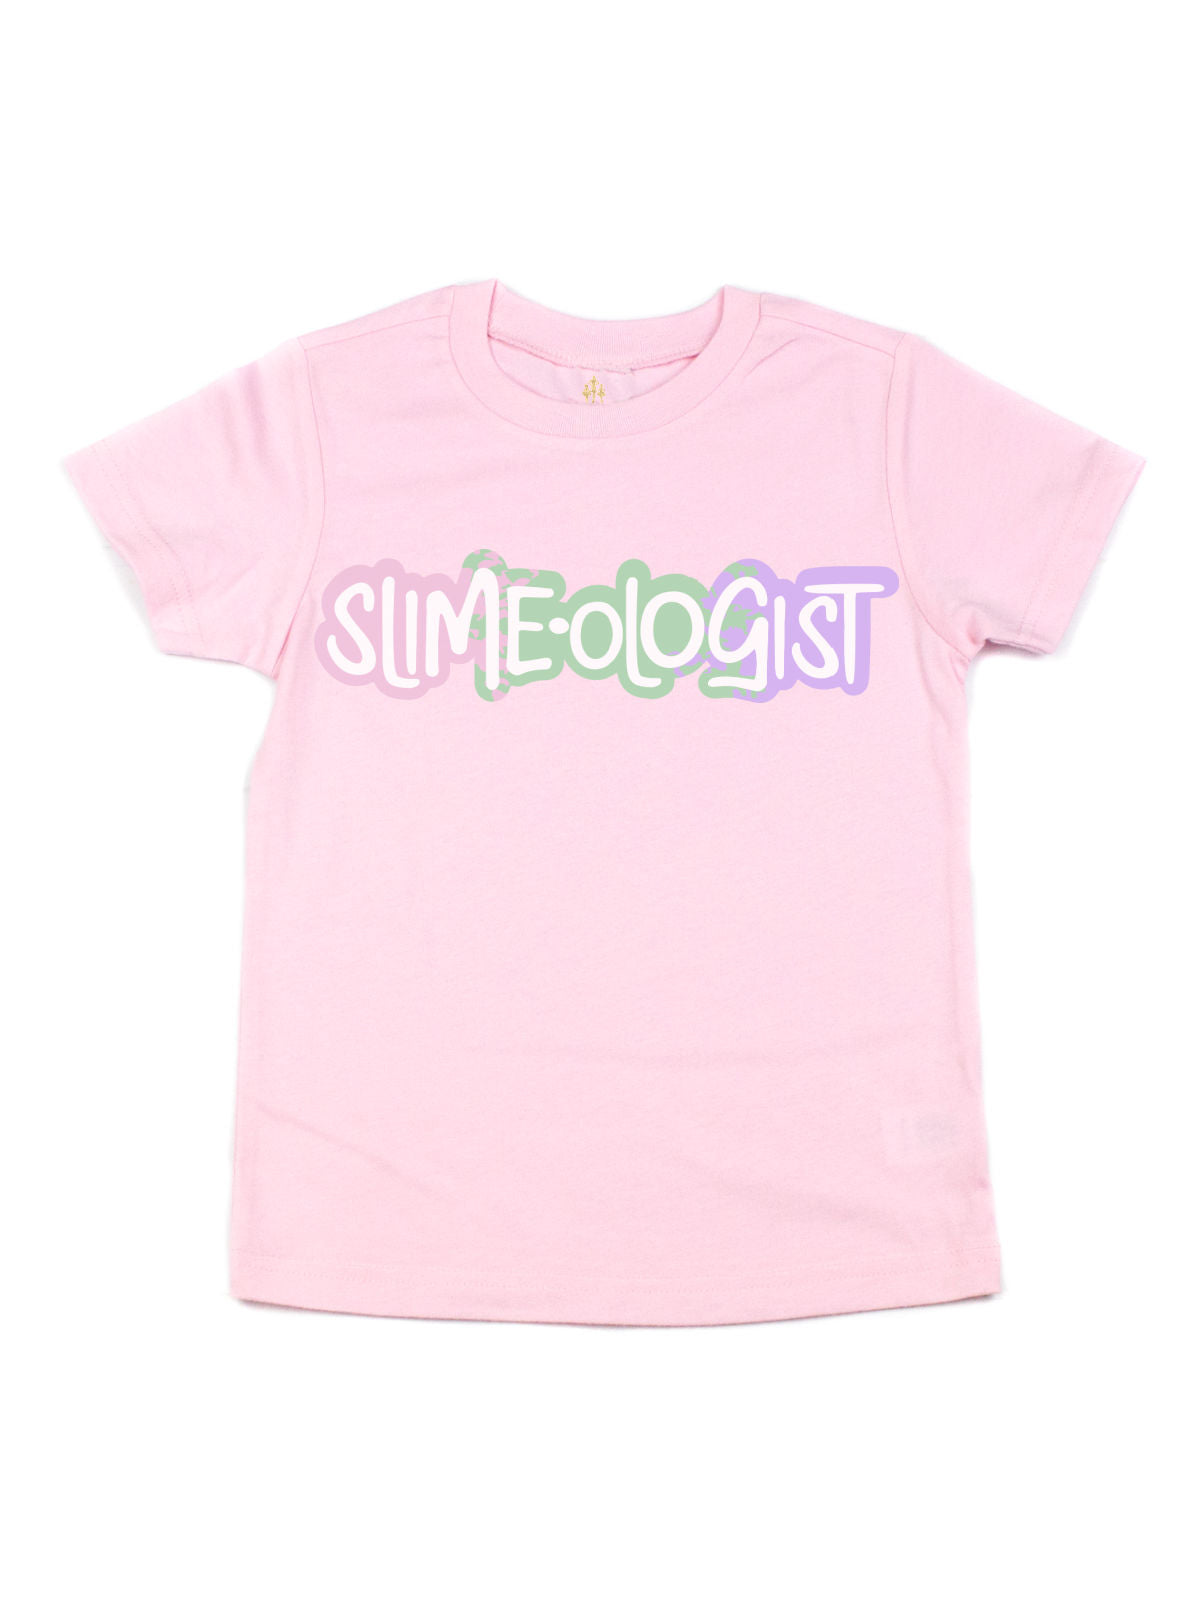 Slimeologist Kids Pink Shirt